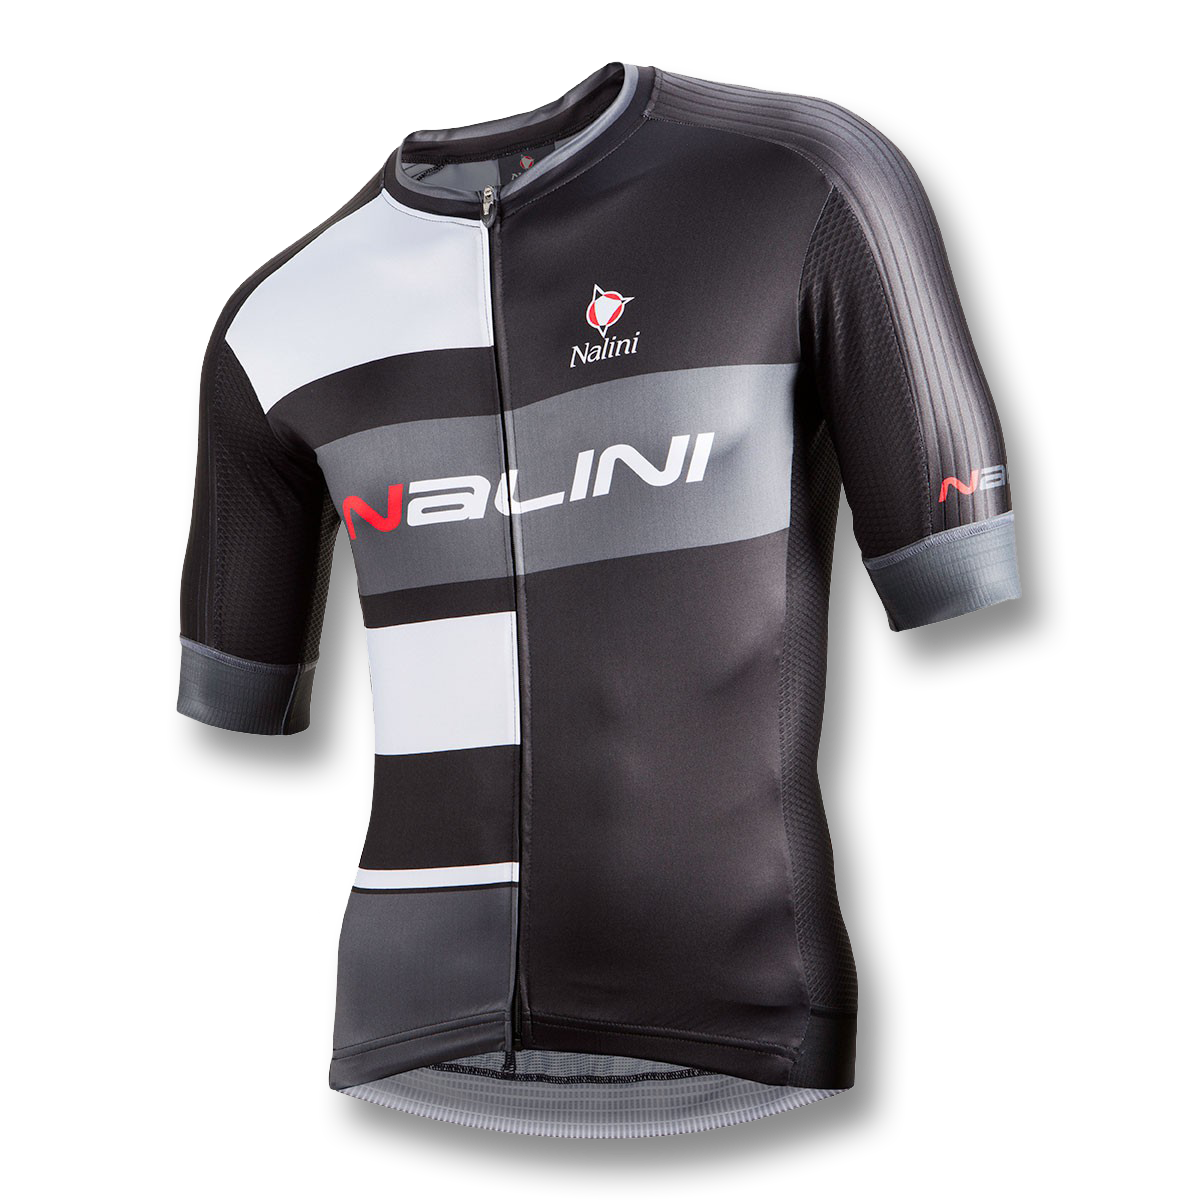 Nalini Cycling Clothing - Nalini USA